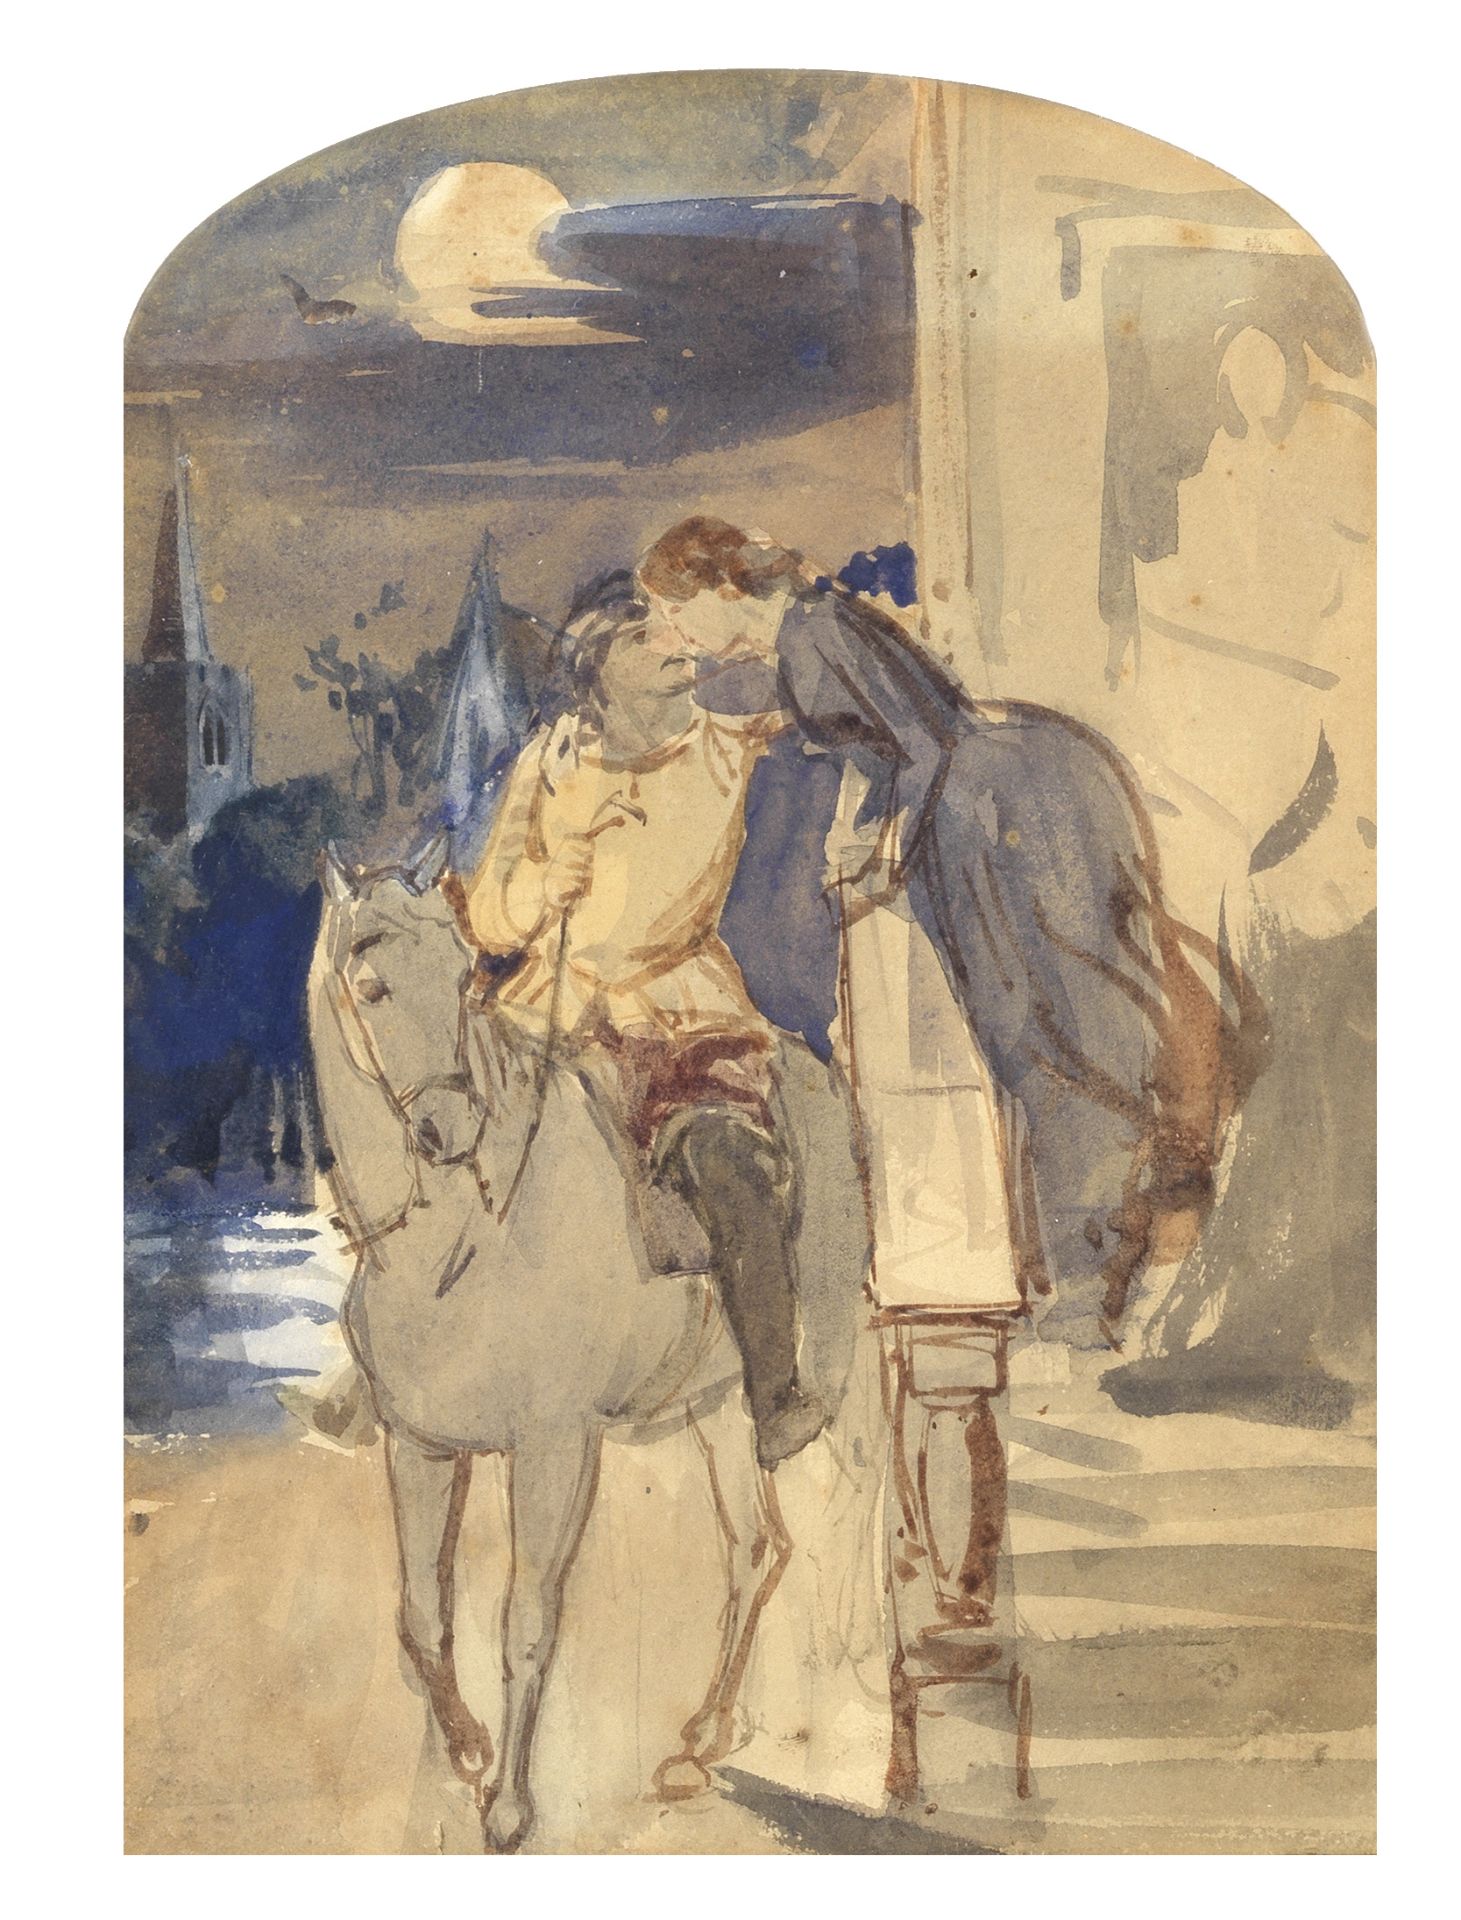 Sir John Everett Millais, PRA (British, 1829-1896) Lovers embracing by moonlight